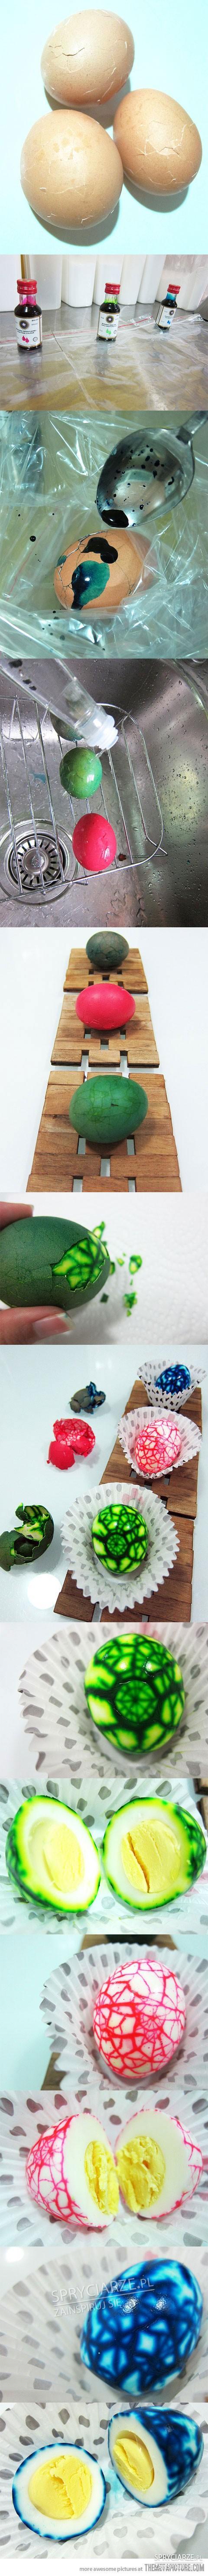 Monster jajka na Wielkanoc